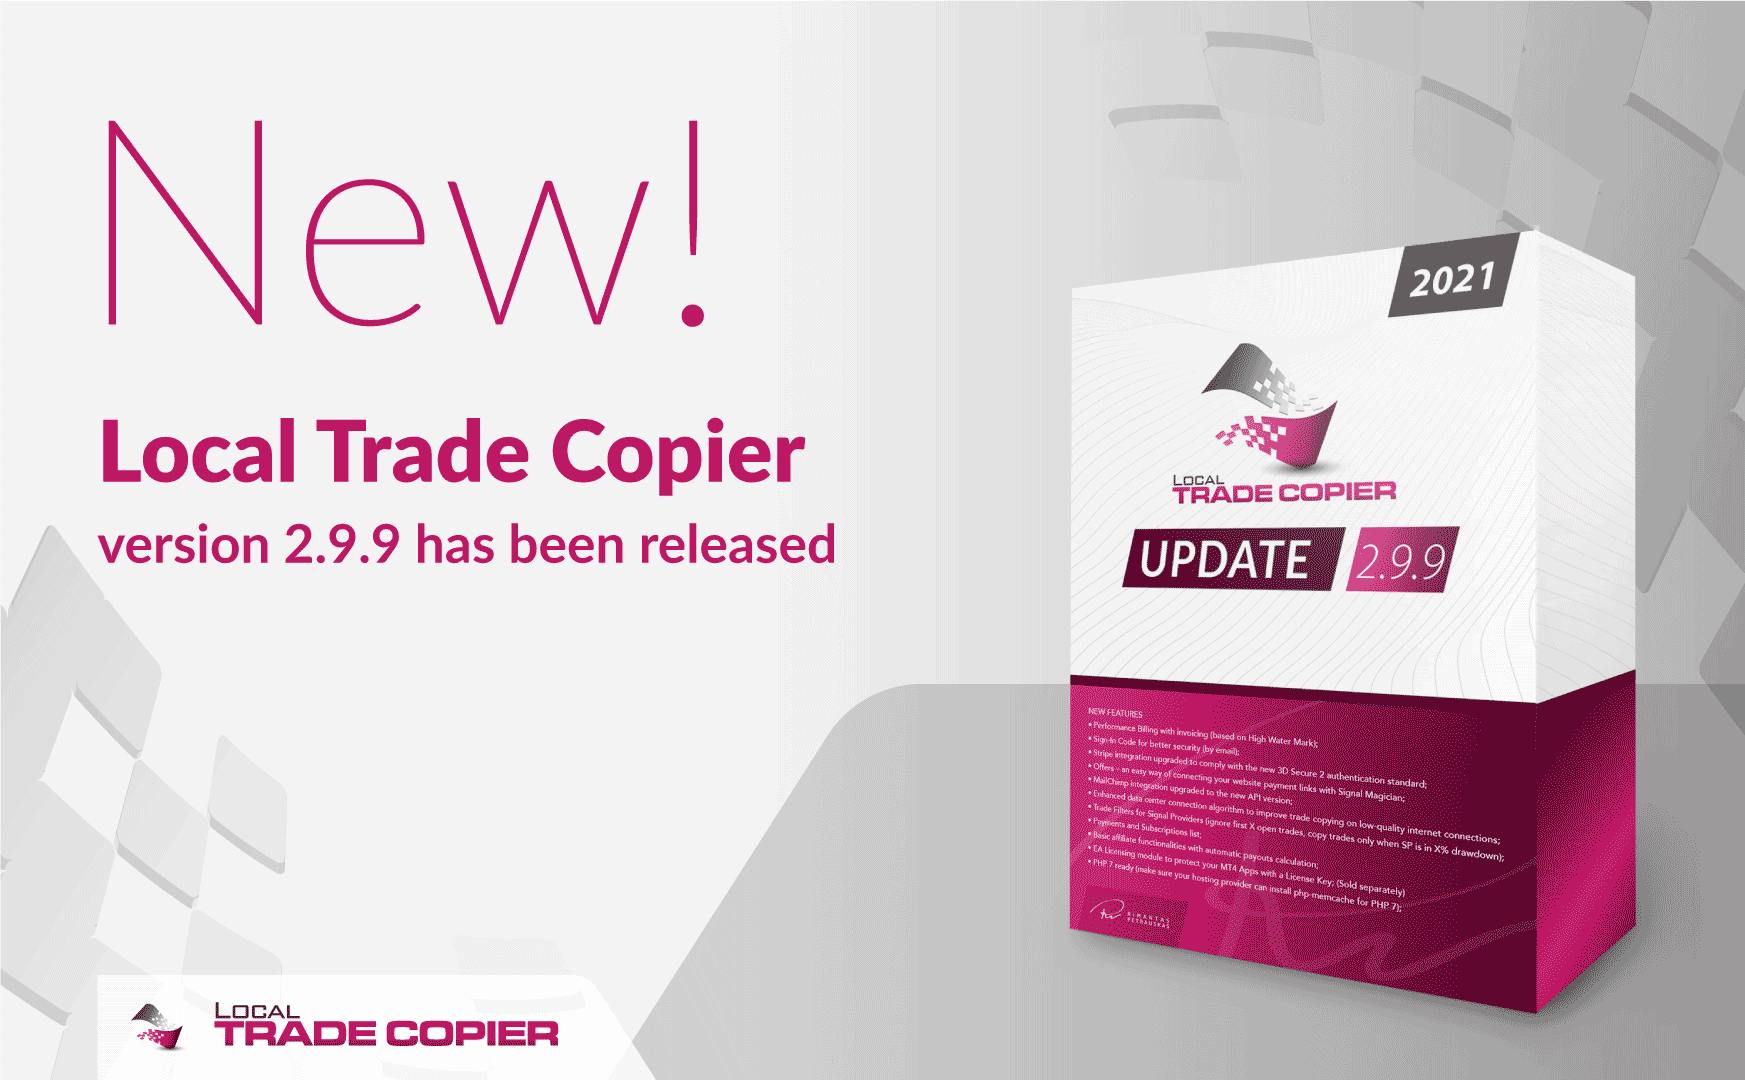 New Local Trade Copier version 2.9.9 has been released